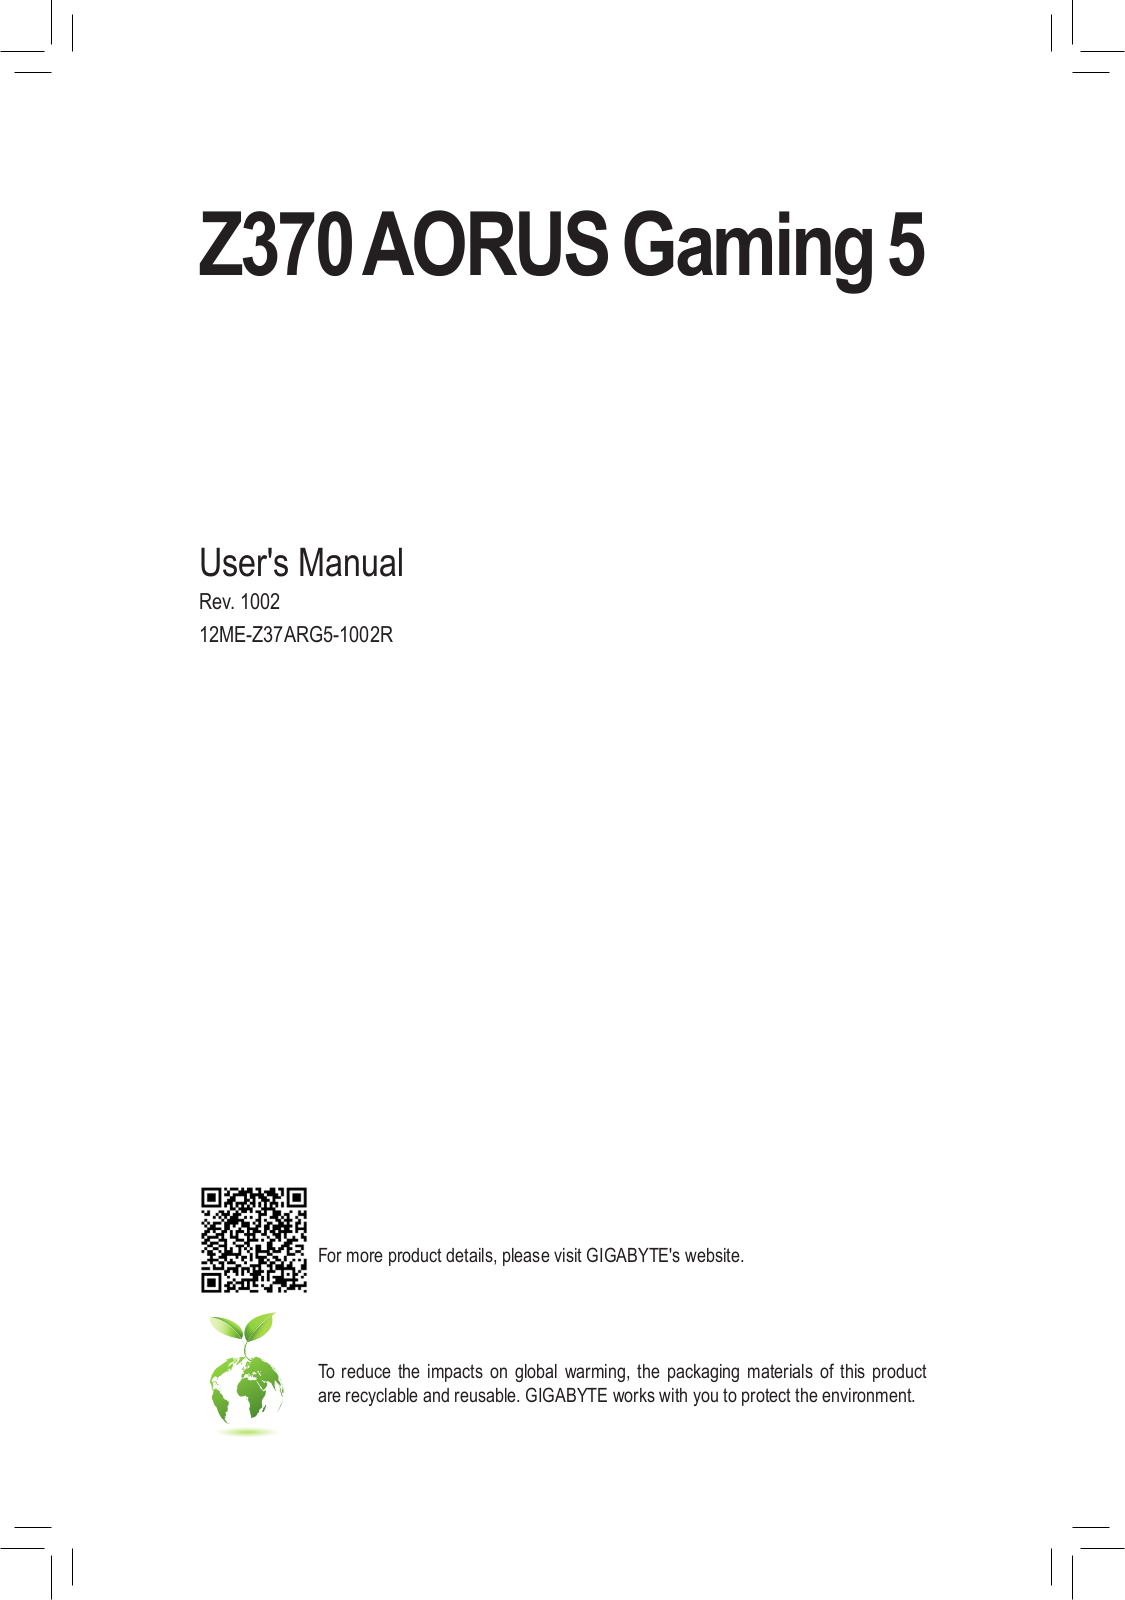 GIGABYTE Z370 AORUS GAMING 5 User Manual